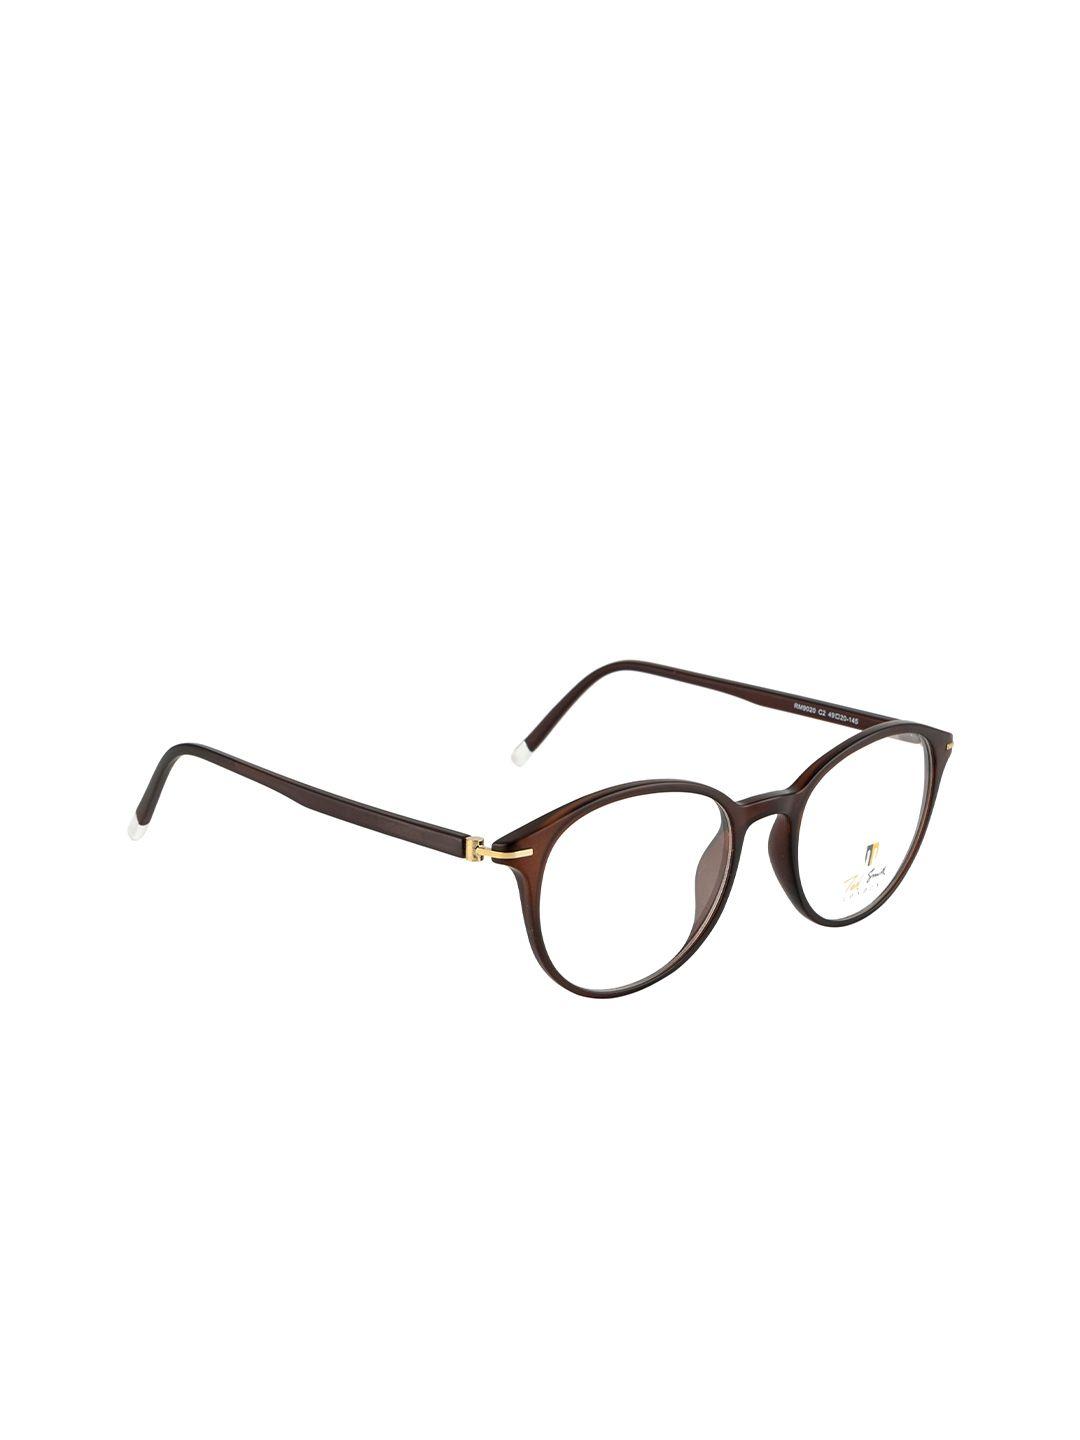 ted smith unisex brown full rim round frames eyeglasses